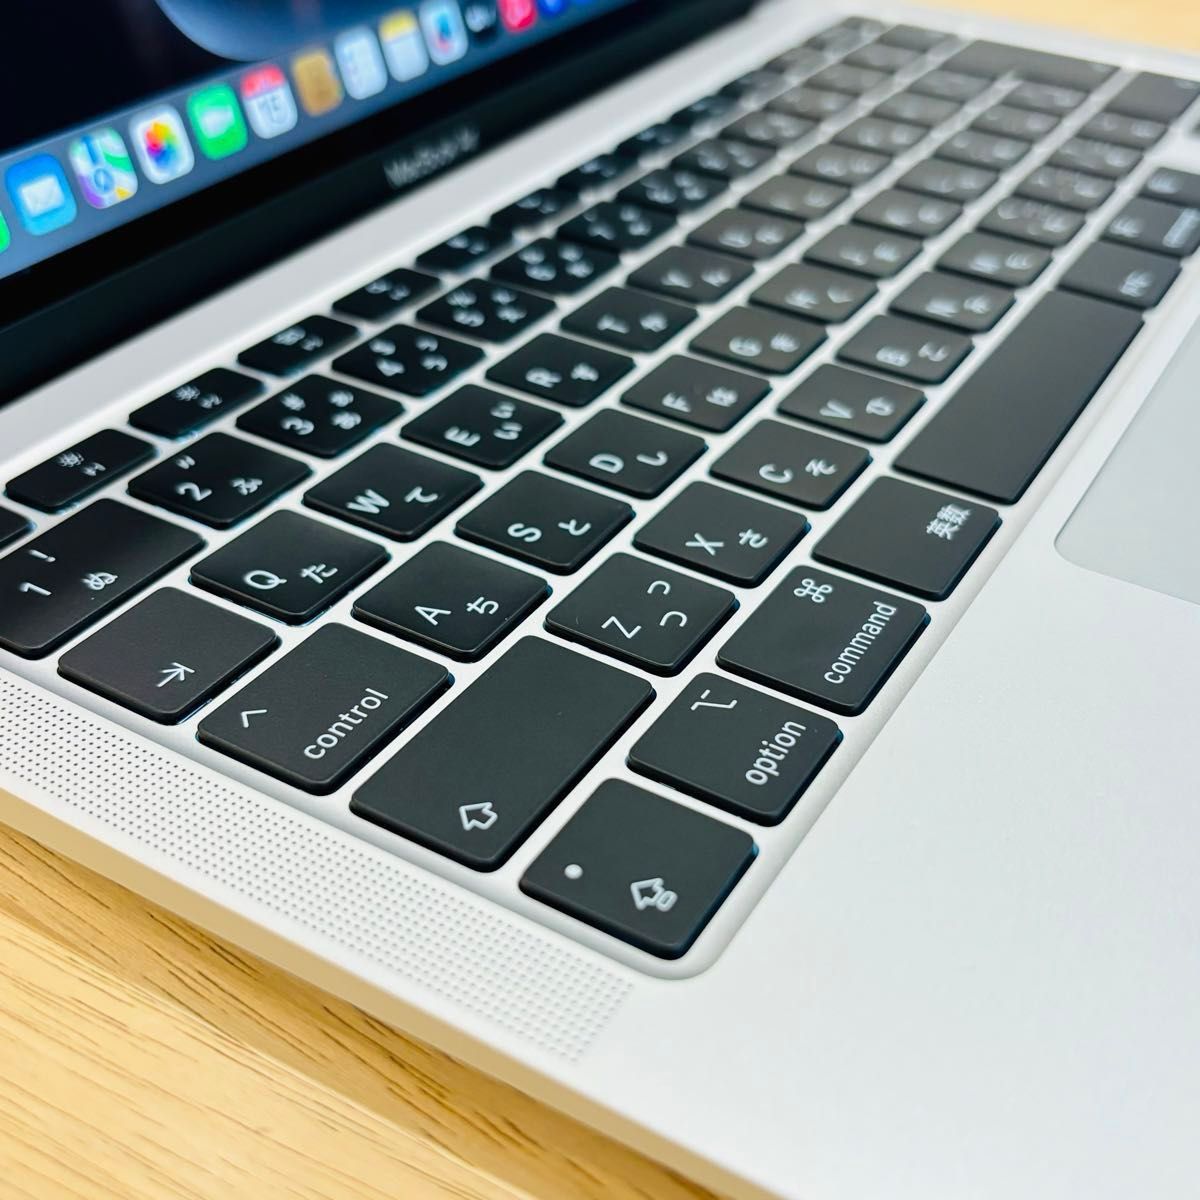 M1  MacBook Air 16GB CTO 純正ケーブル、アダプタ 新品